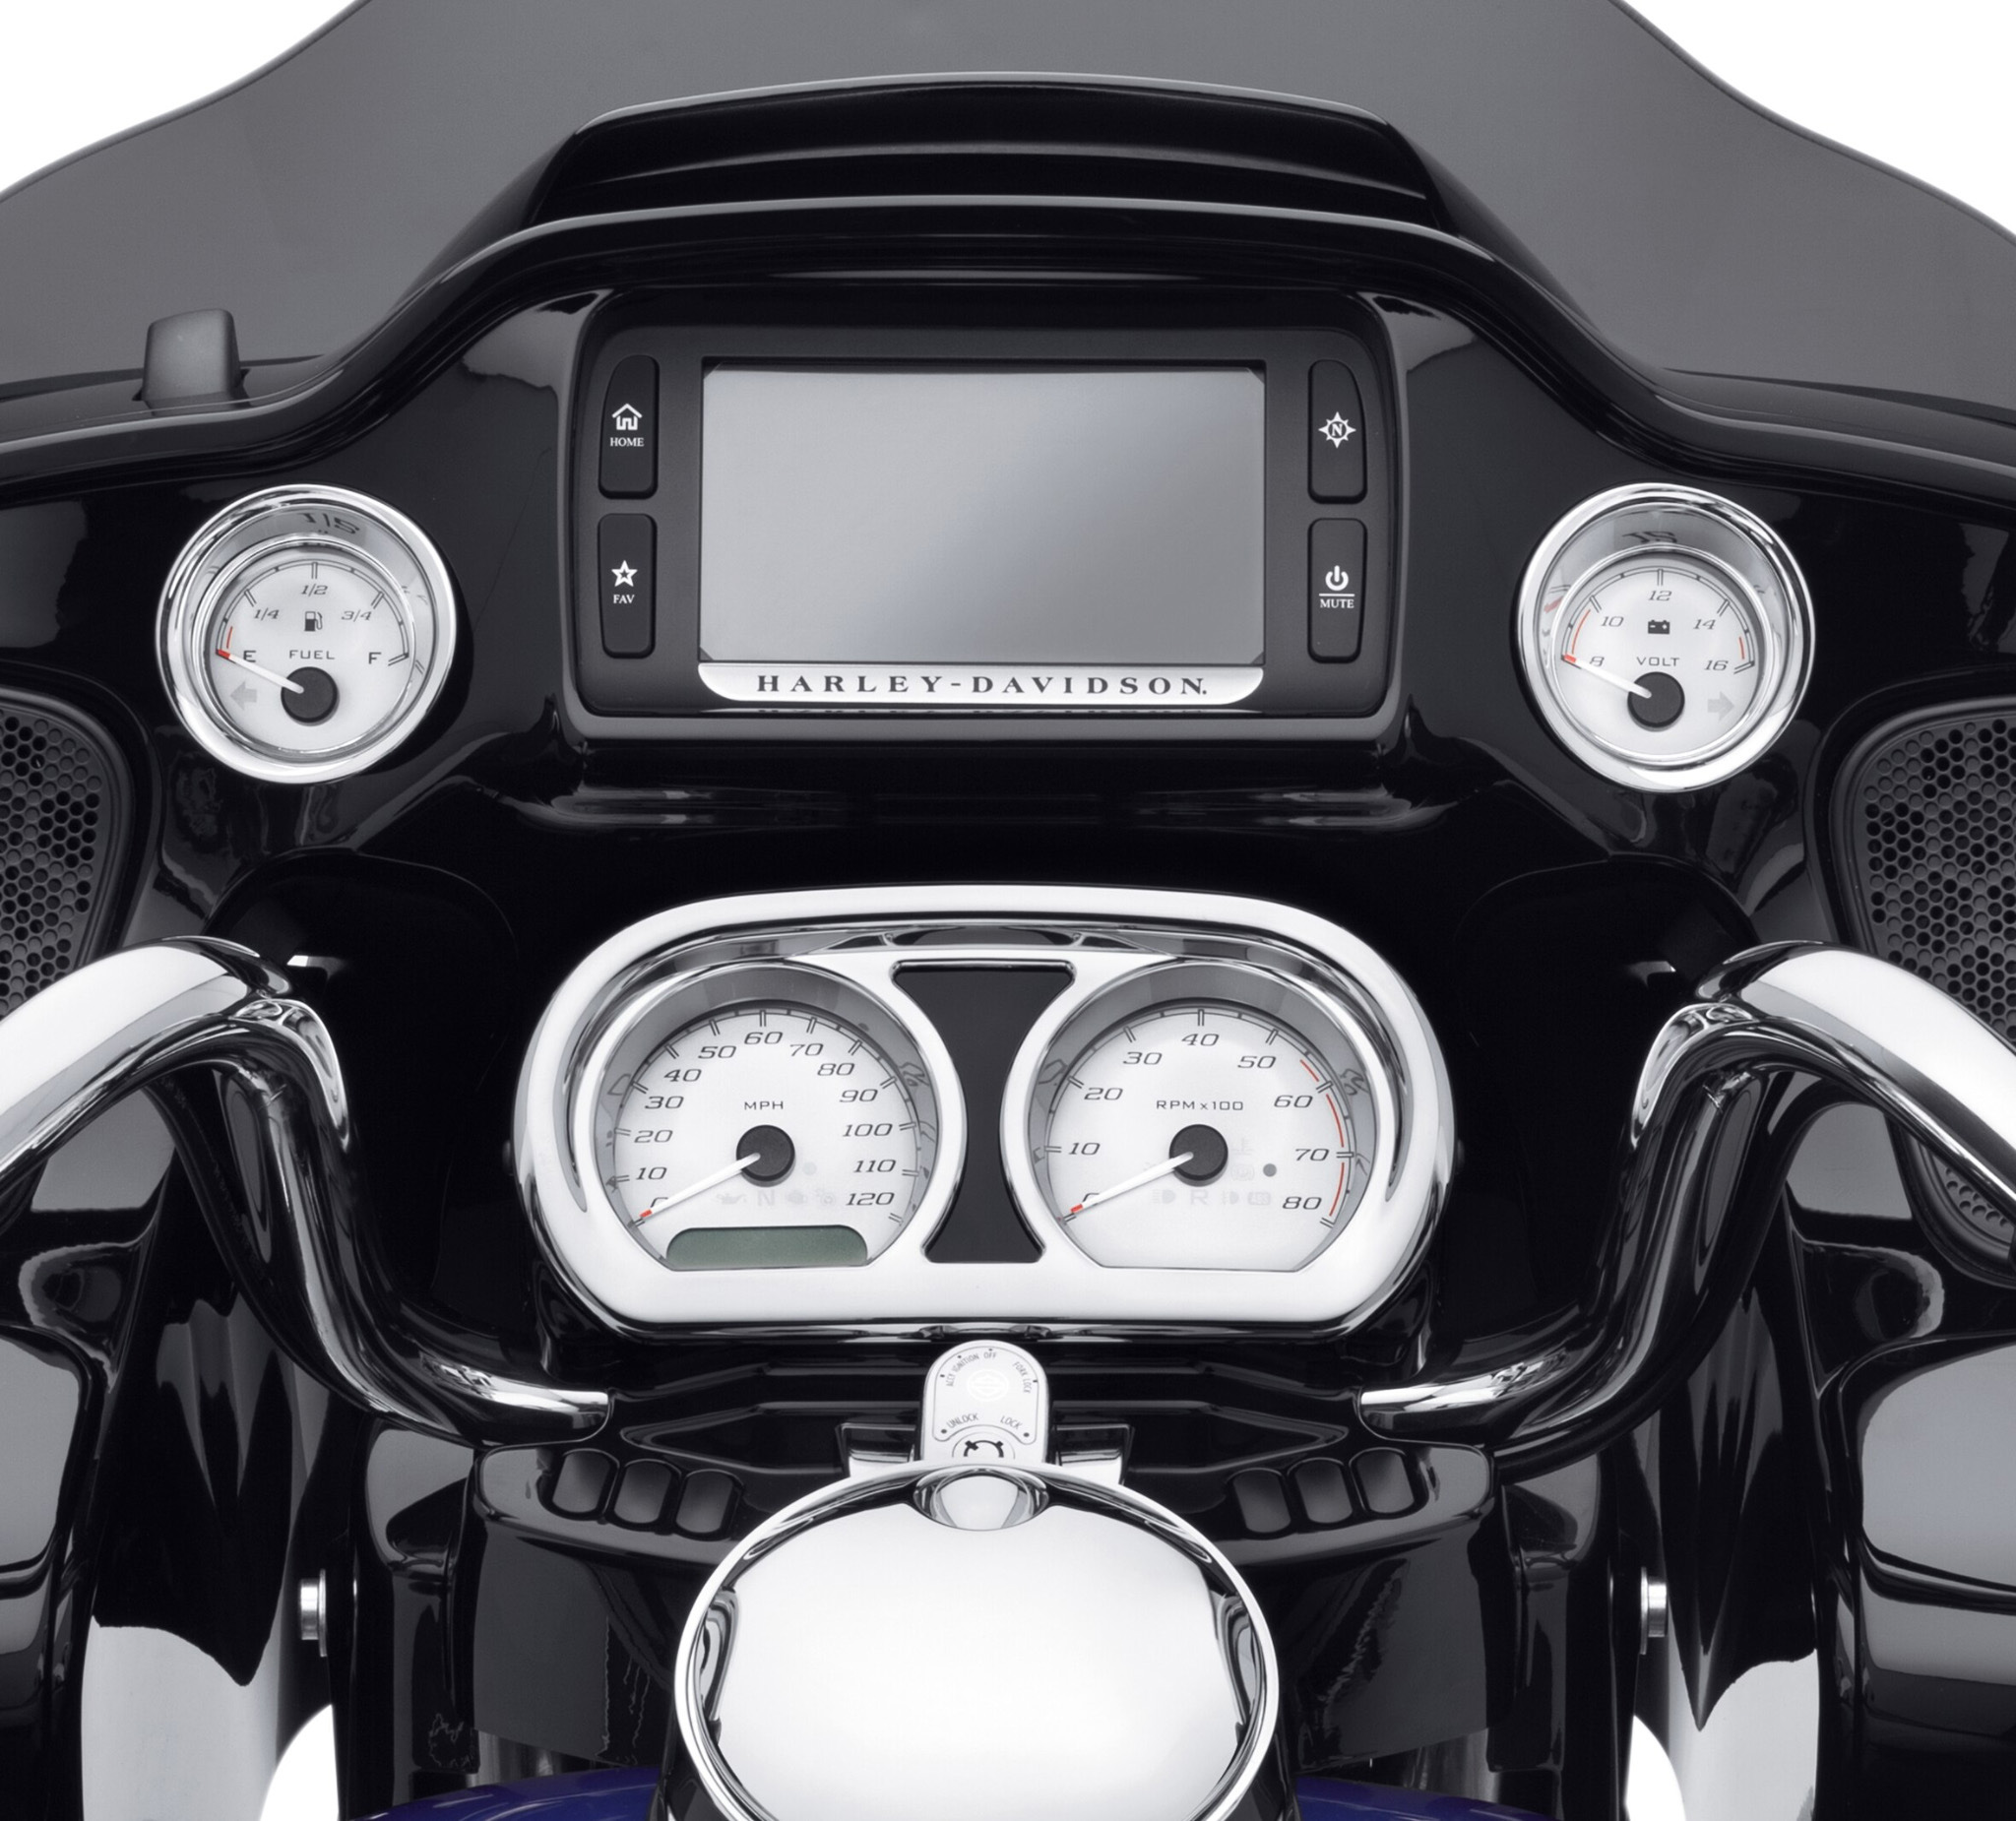 Gauge Trim Kit Chrome fits Harley-Davidson motorcycles